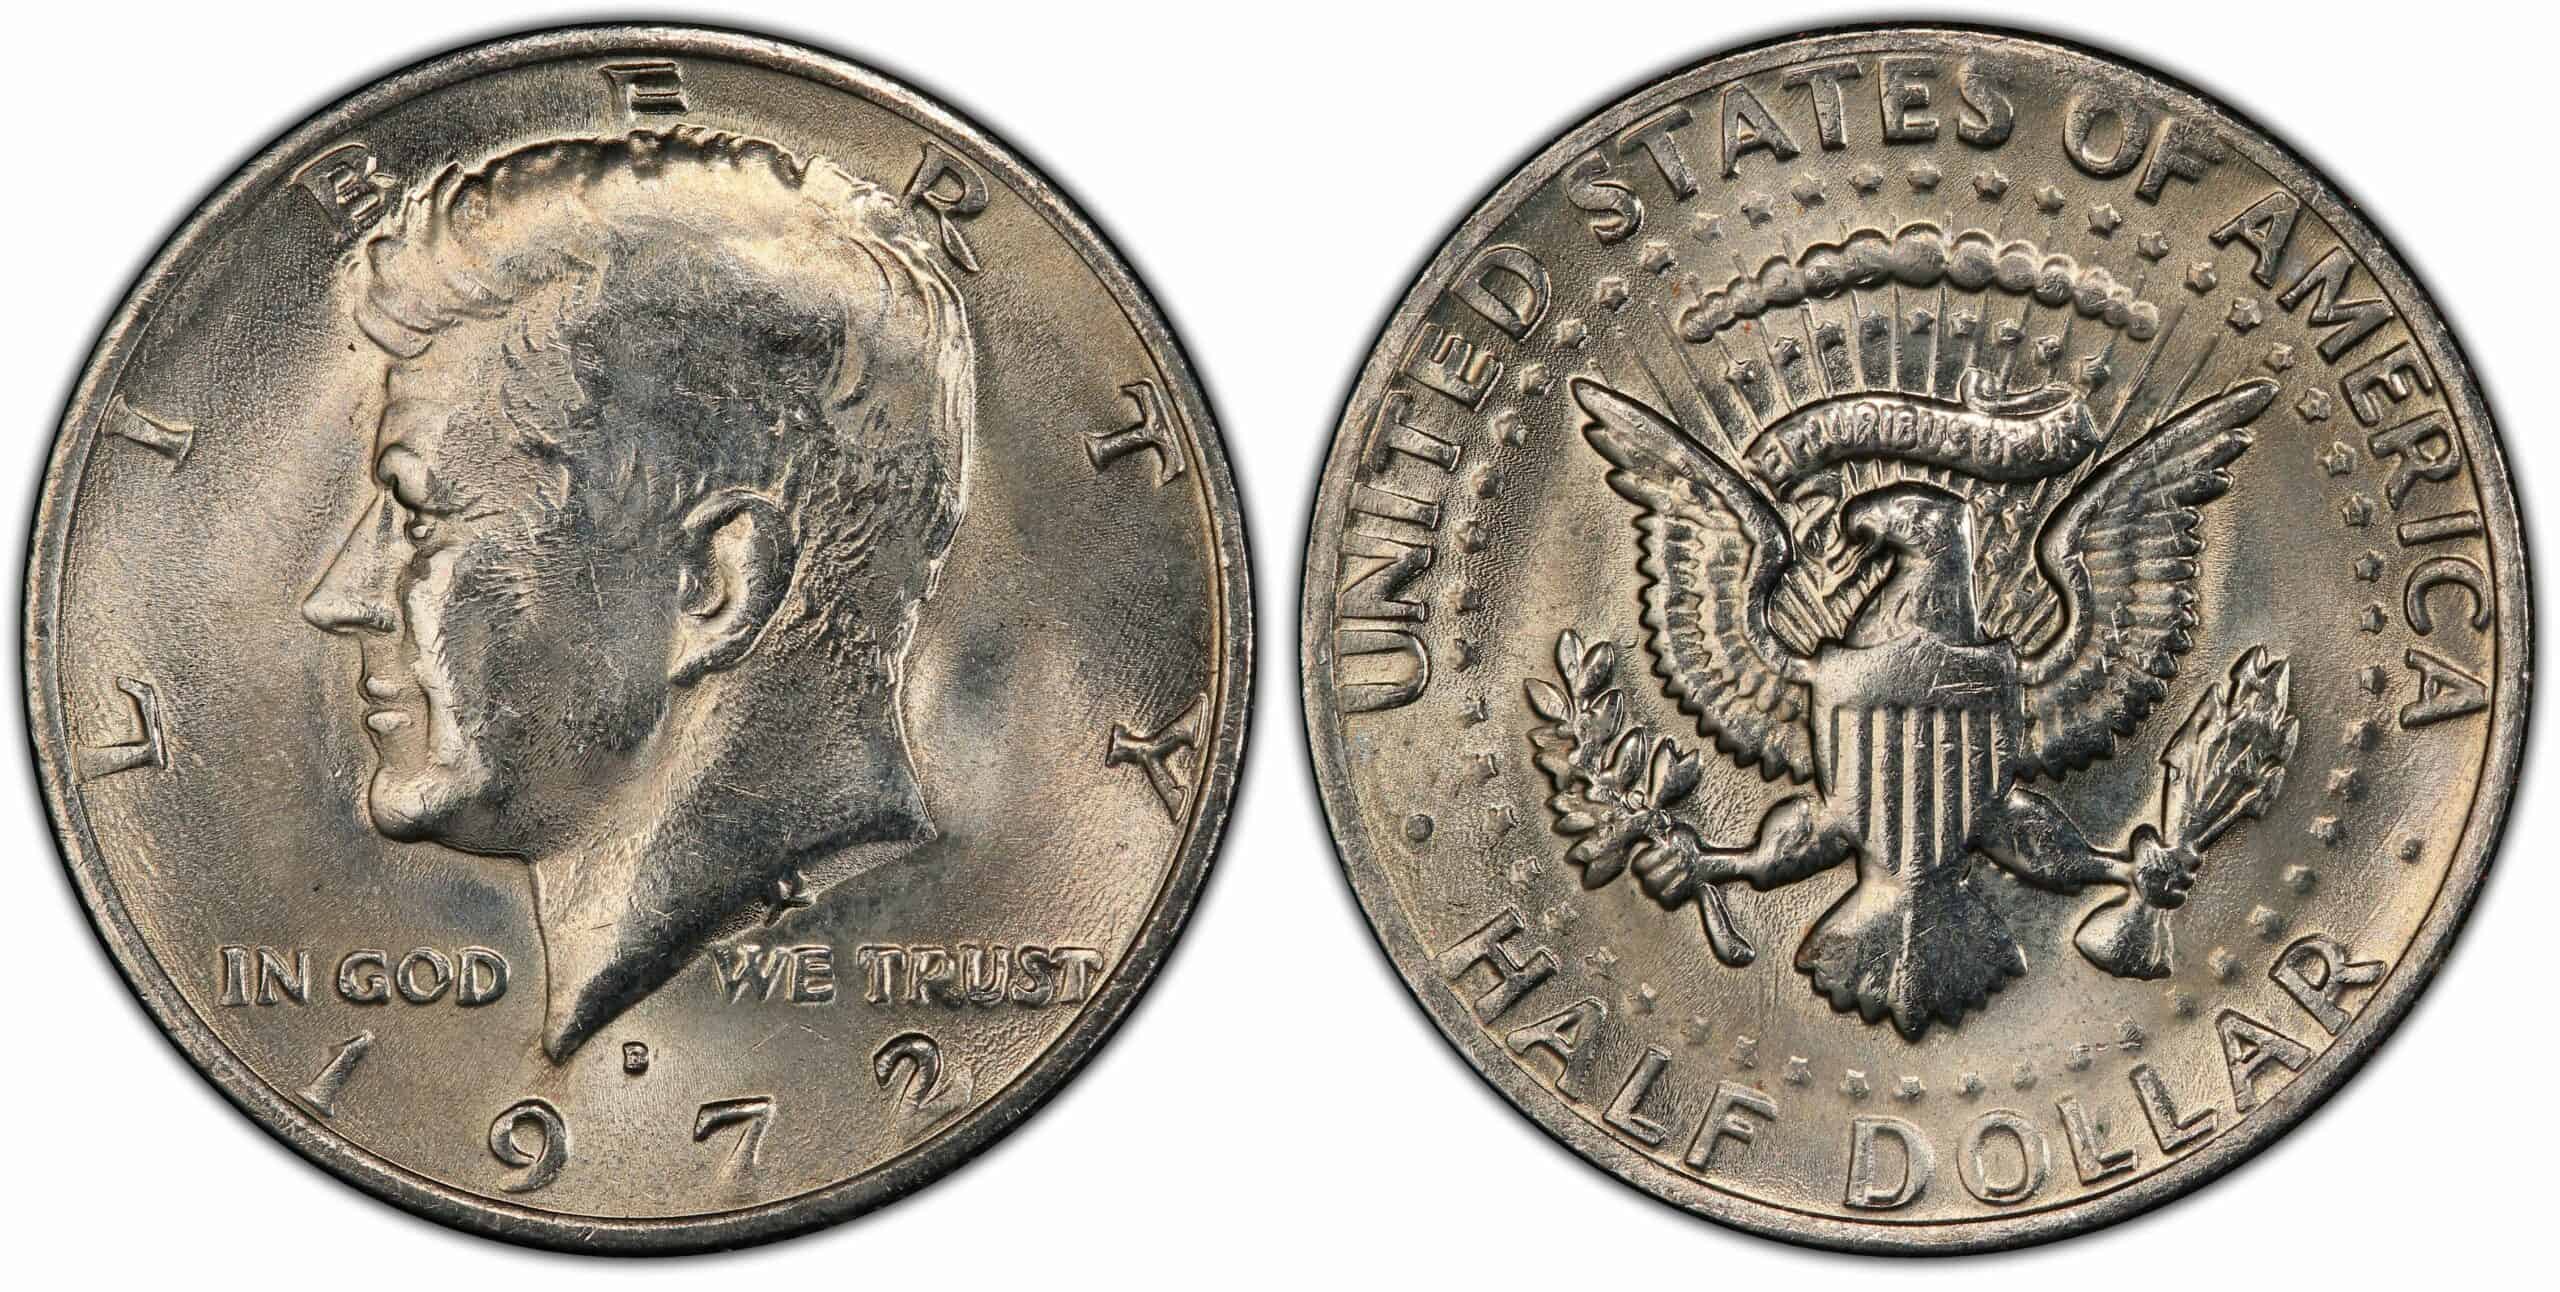 presidential dollar coins value 1972